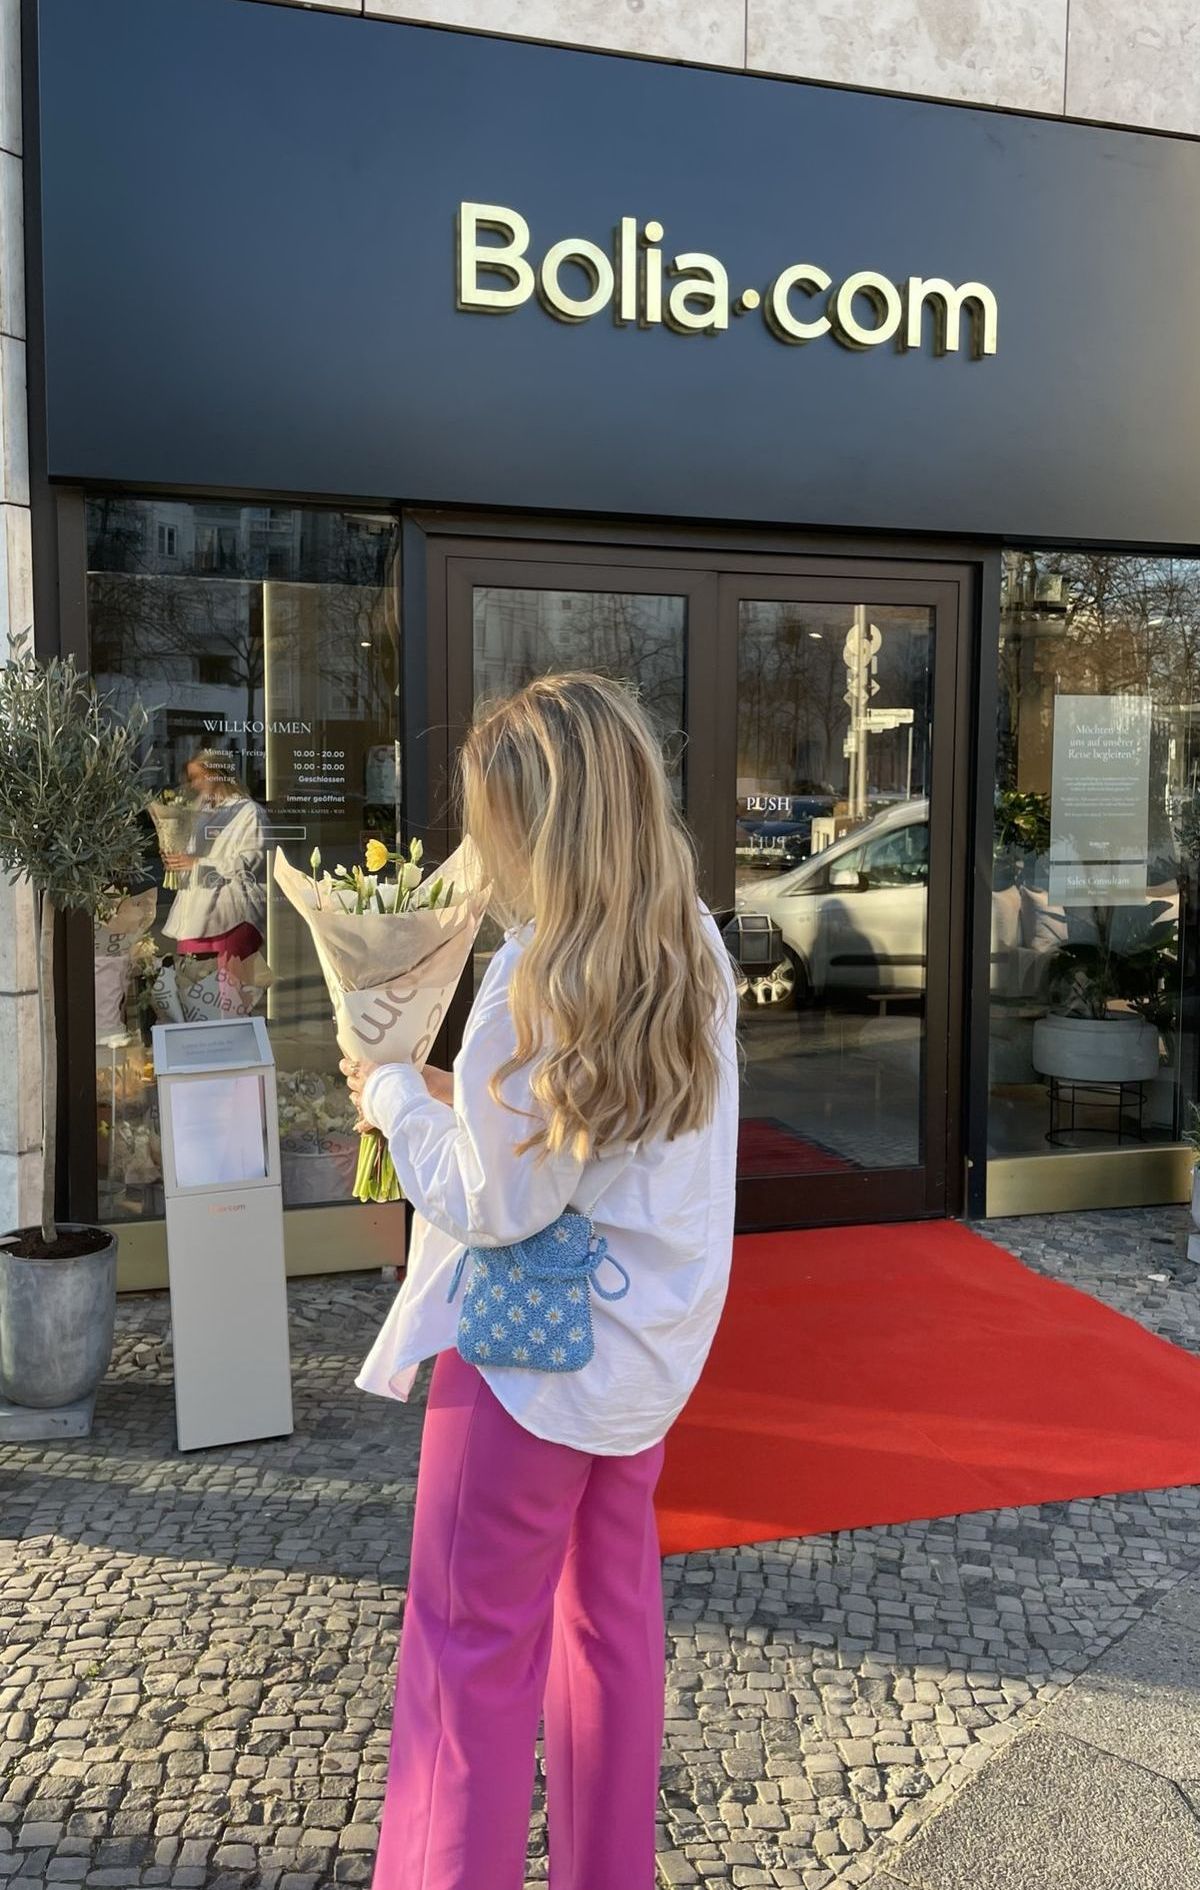 Bolia - das Store-Opening in Berlin-Charlottenburg